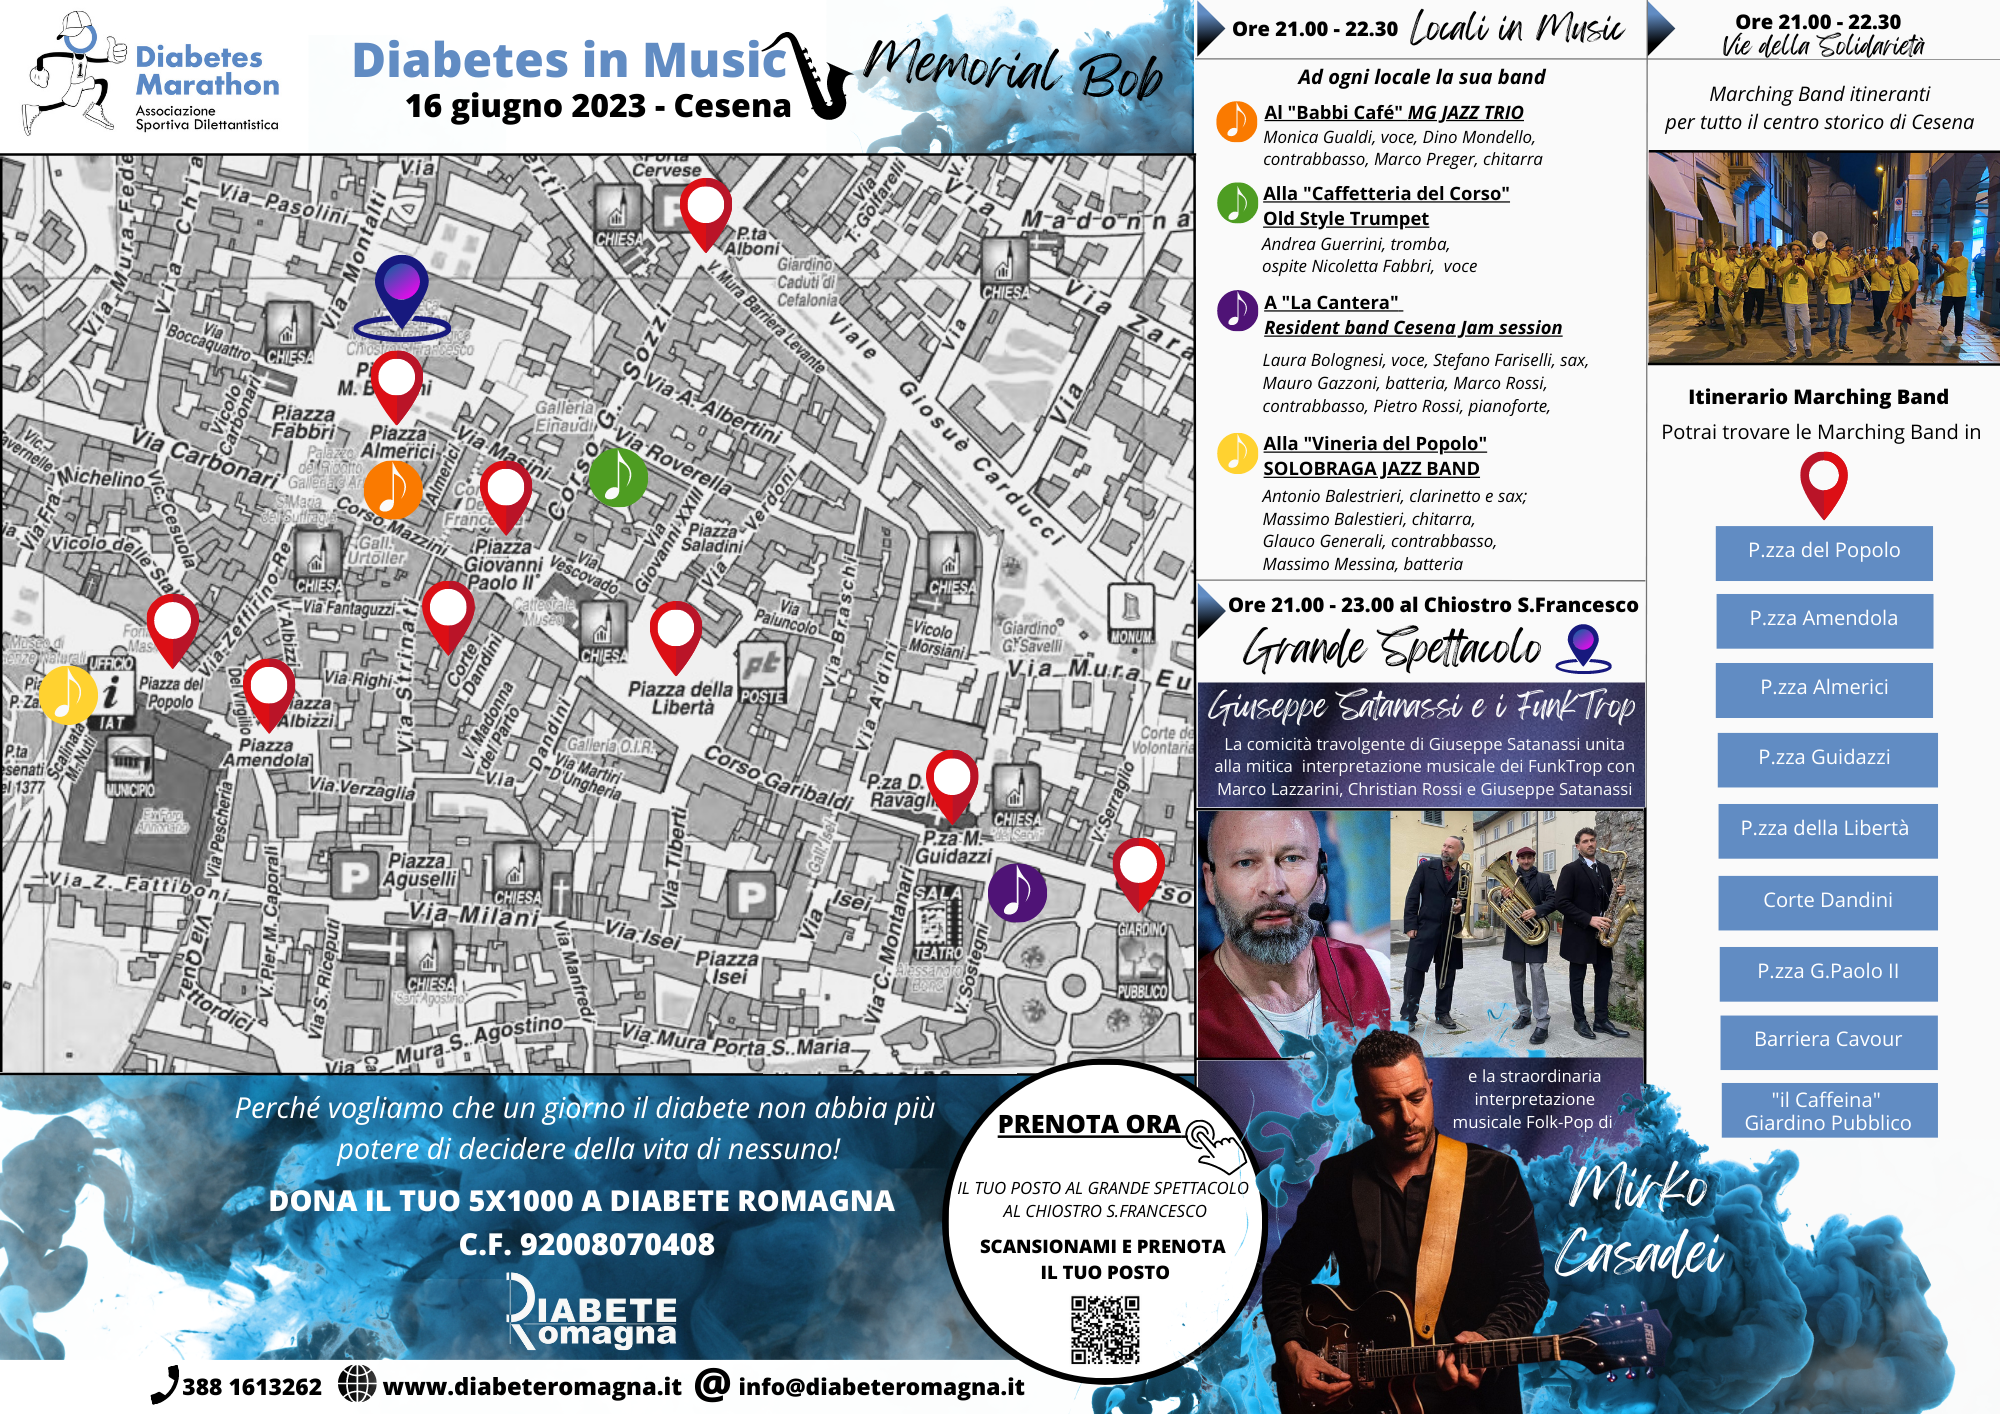 Diabetes In Music “Memorial Bob” 2023 – Venerdì 16 Giugno 2023 Ore 21.00, Cesena